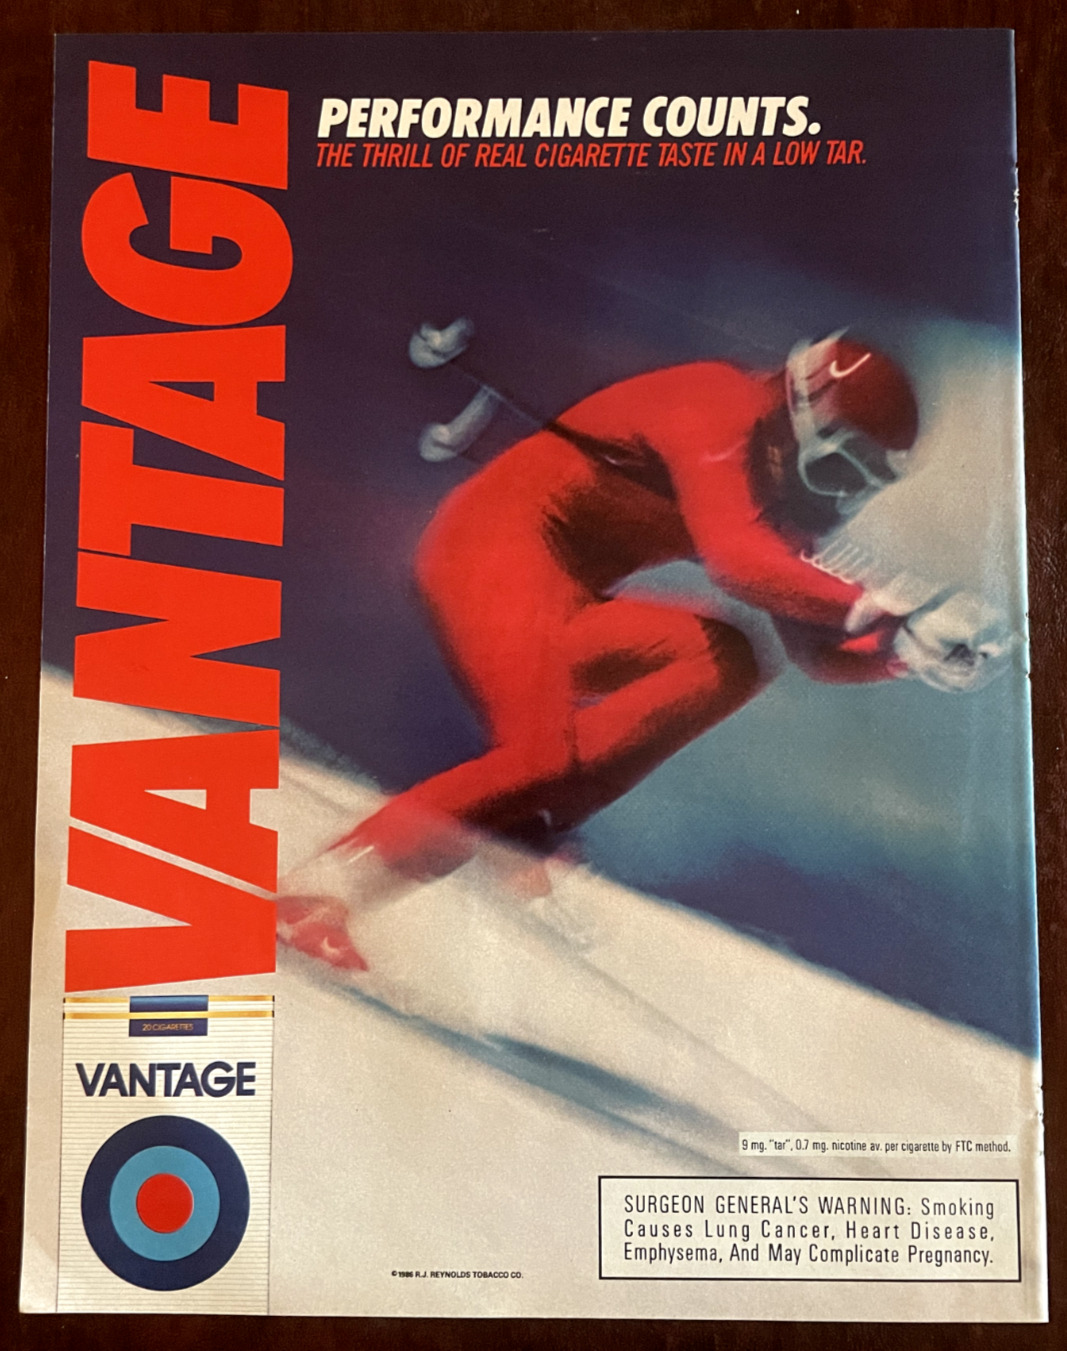 1986 VANTAGE Cigarettes Vintage Print Ad Skiing Winter Performance Counts